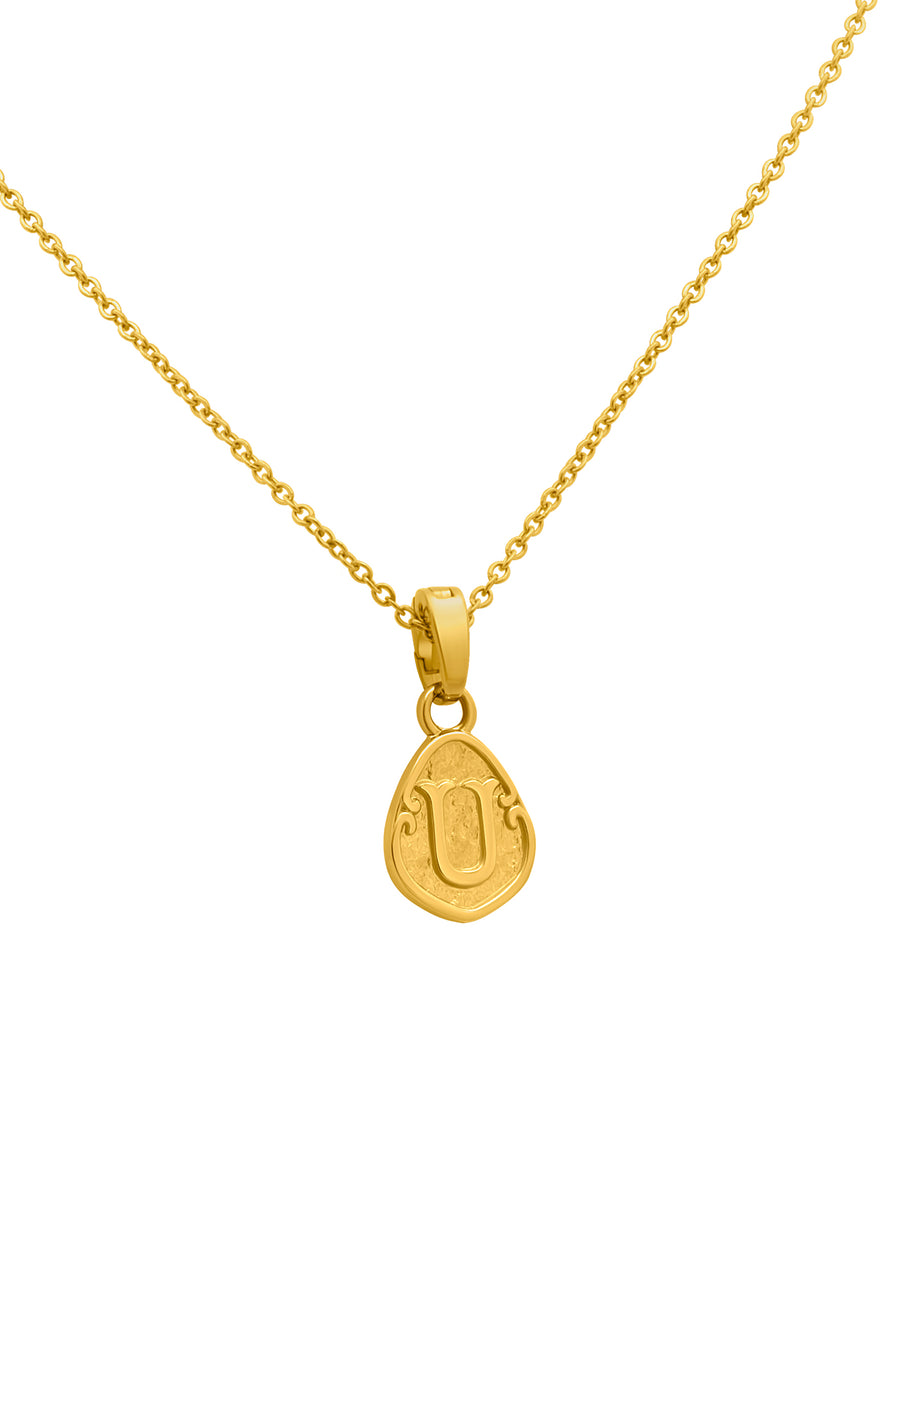 "U" Tberfil Letter Pendant with Petite Adjustable Chain Necklace